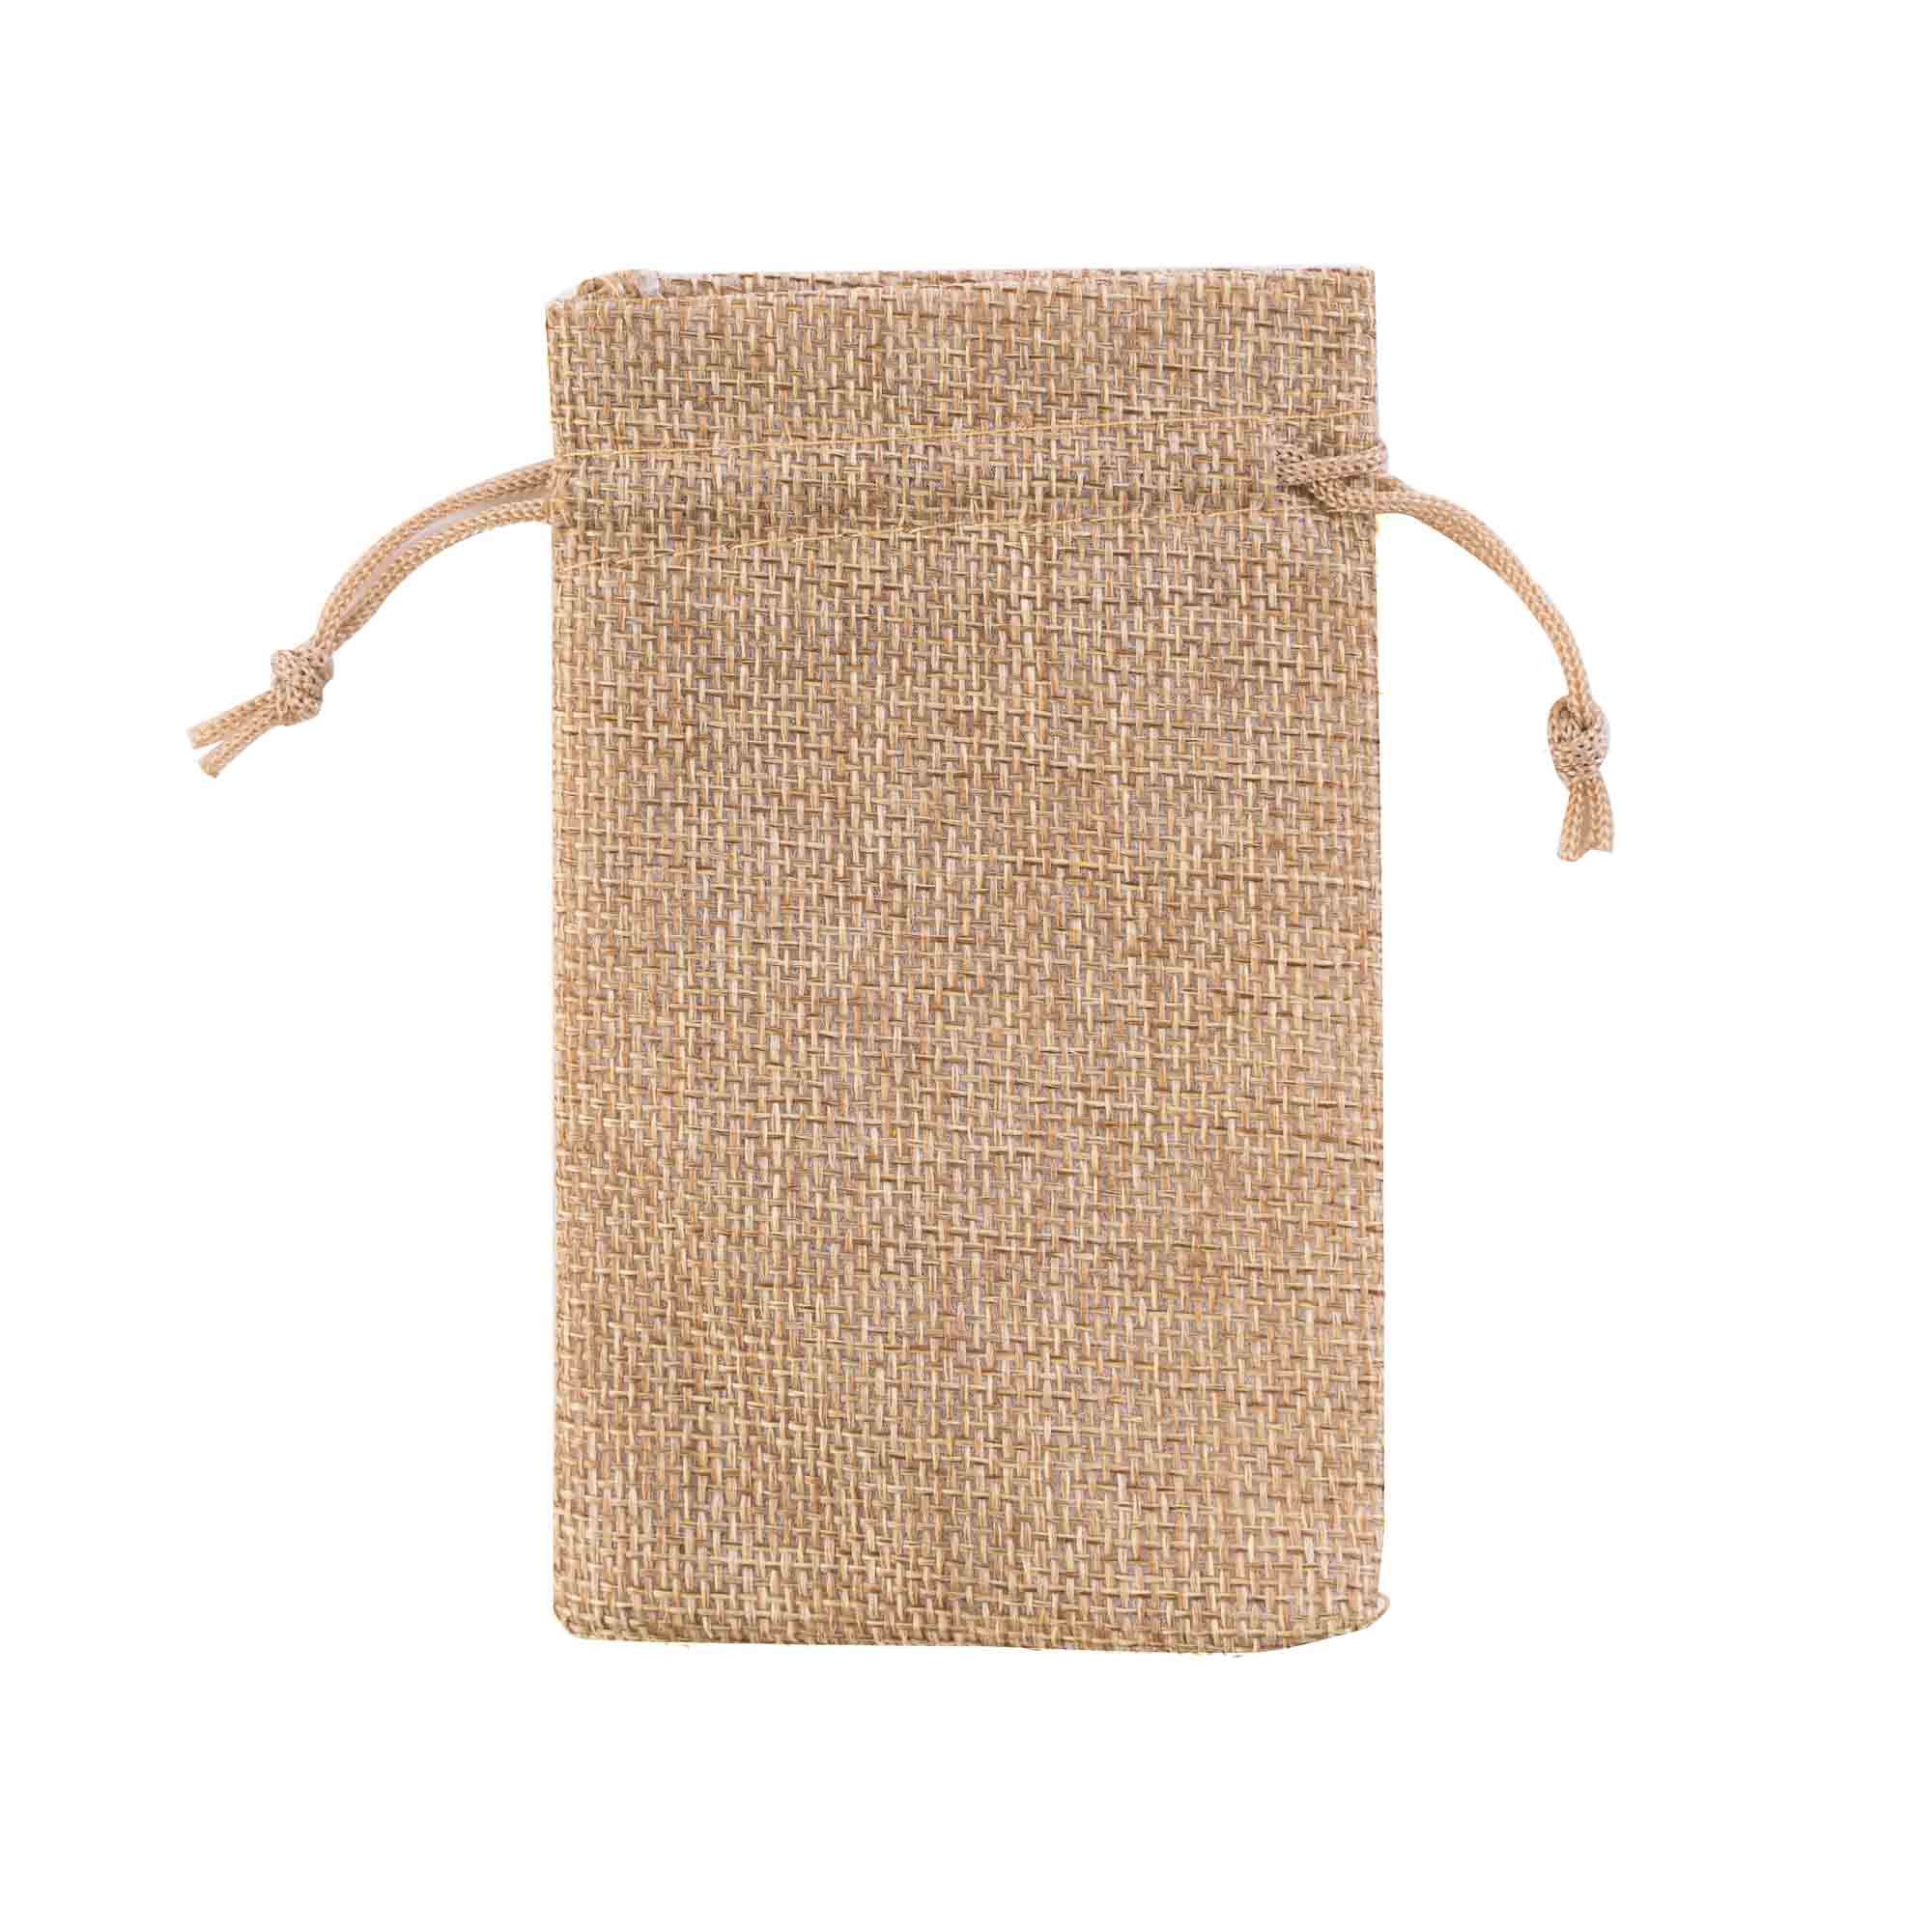 Burlap Gift Bag with Drawstring 3" x 5" 50pc/bag